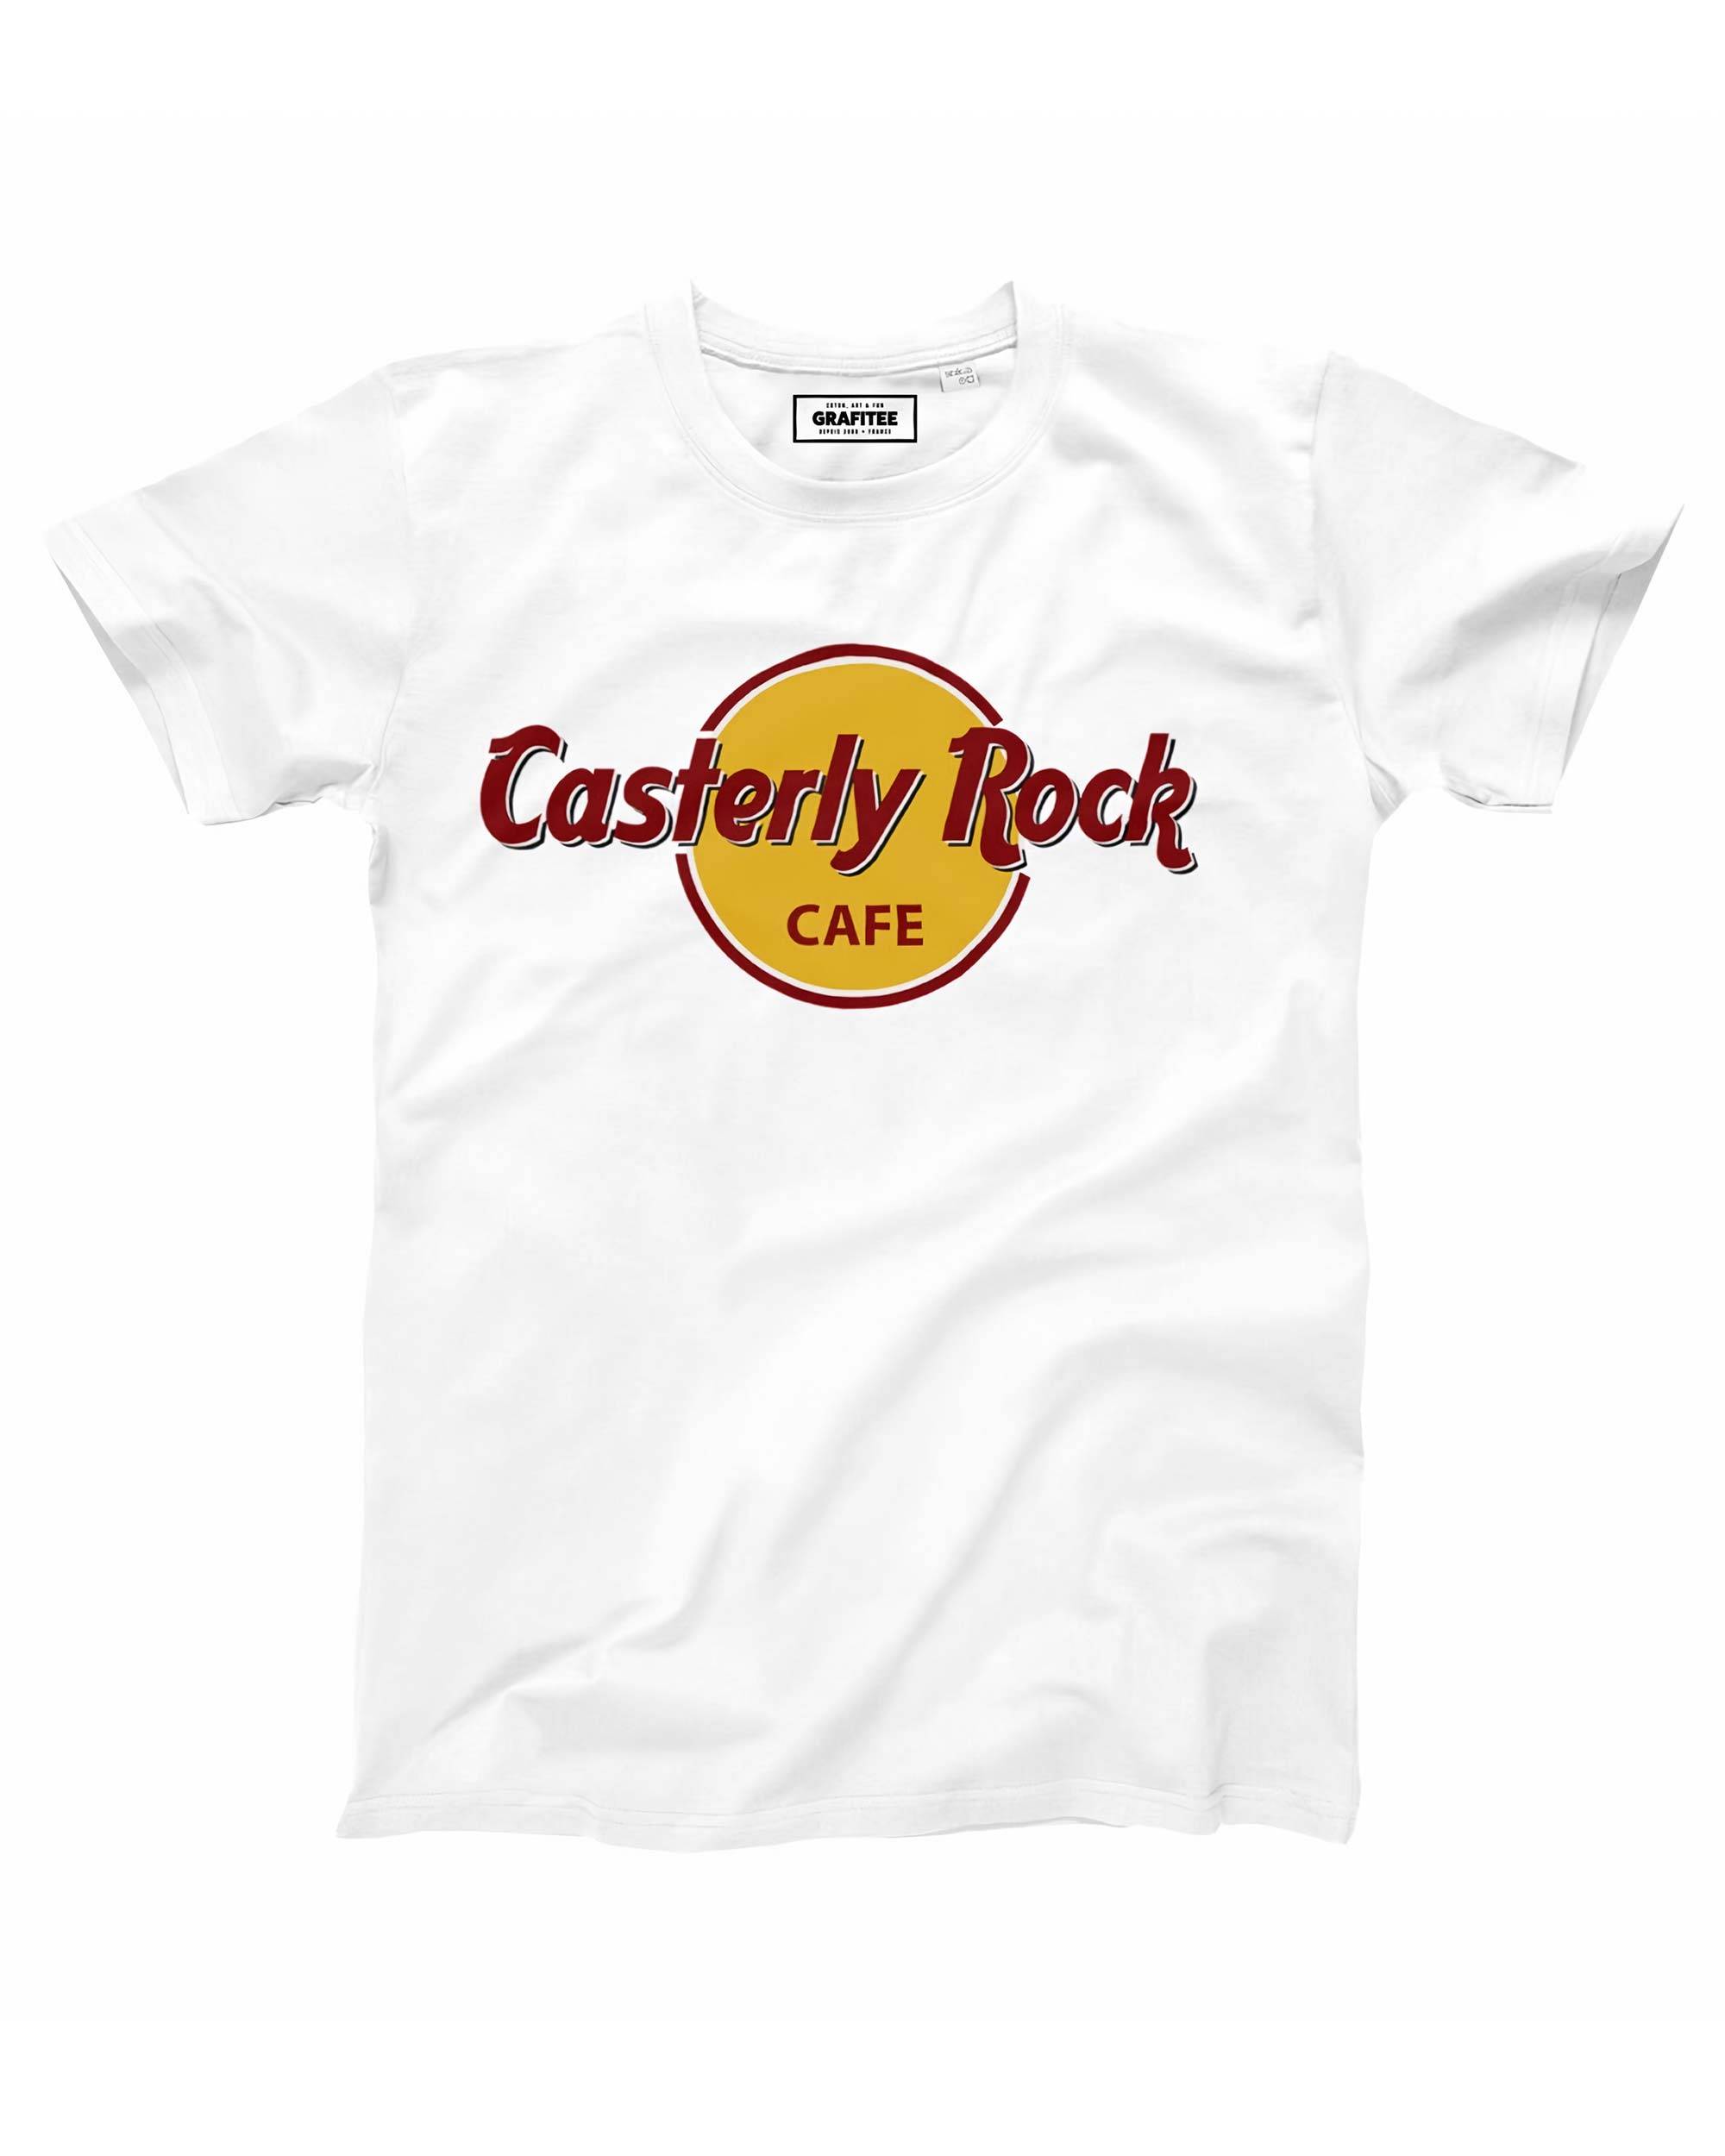 T-shirt Casterly Rock Cafe Grafitee